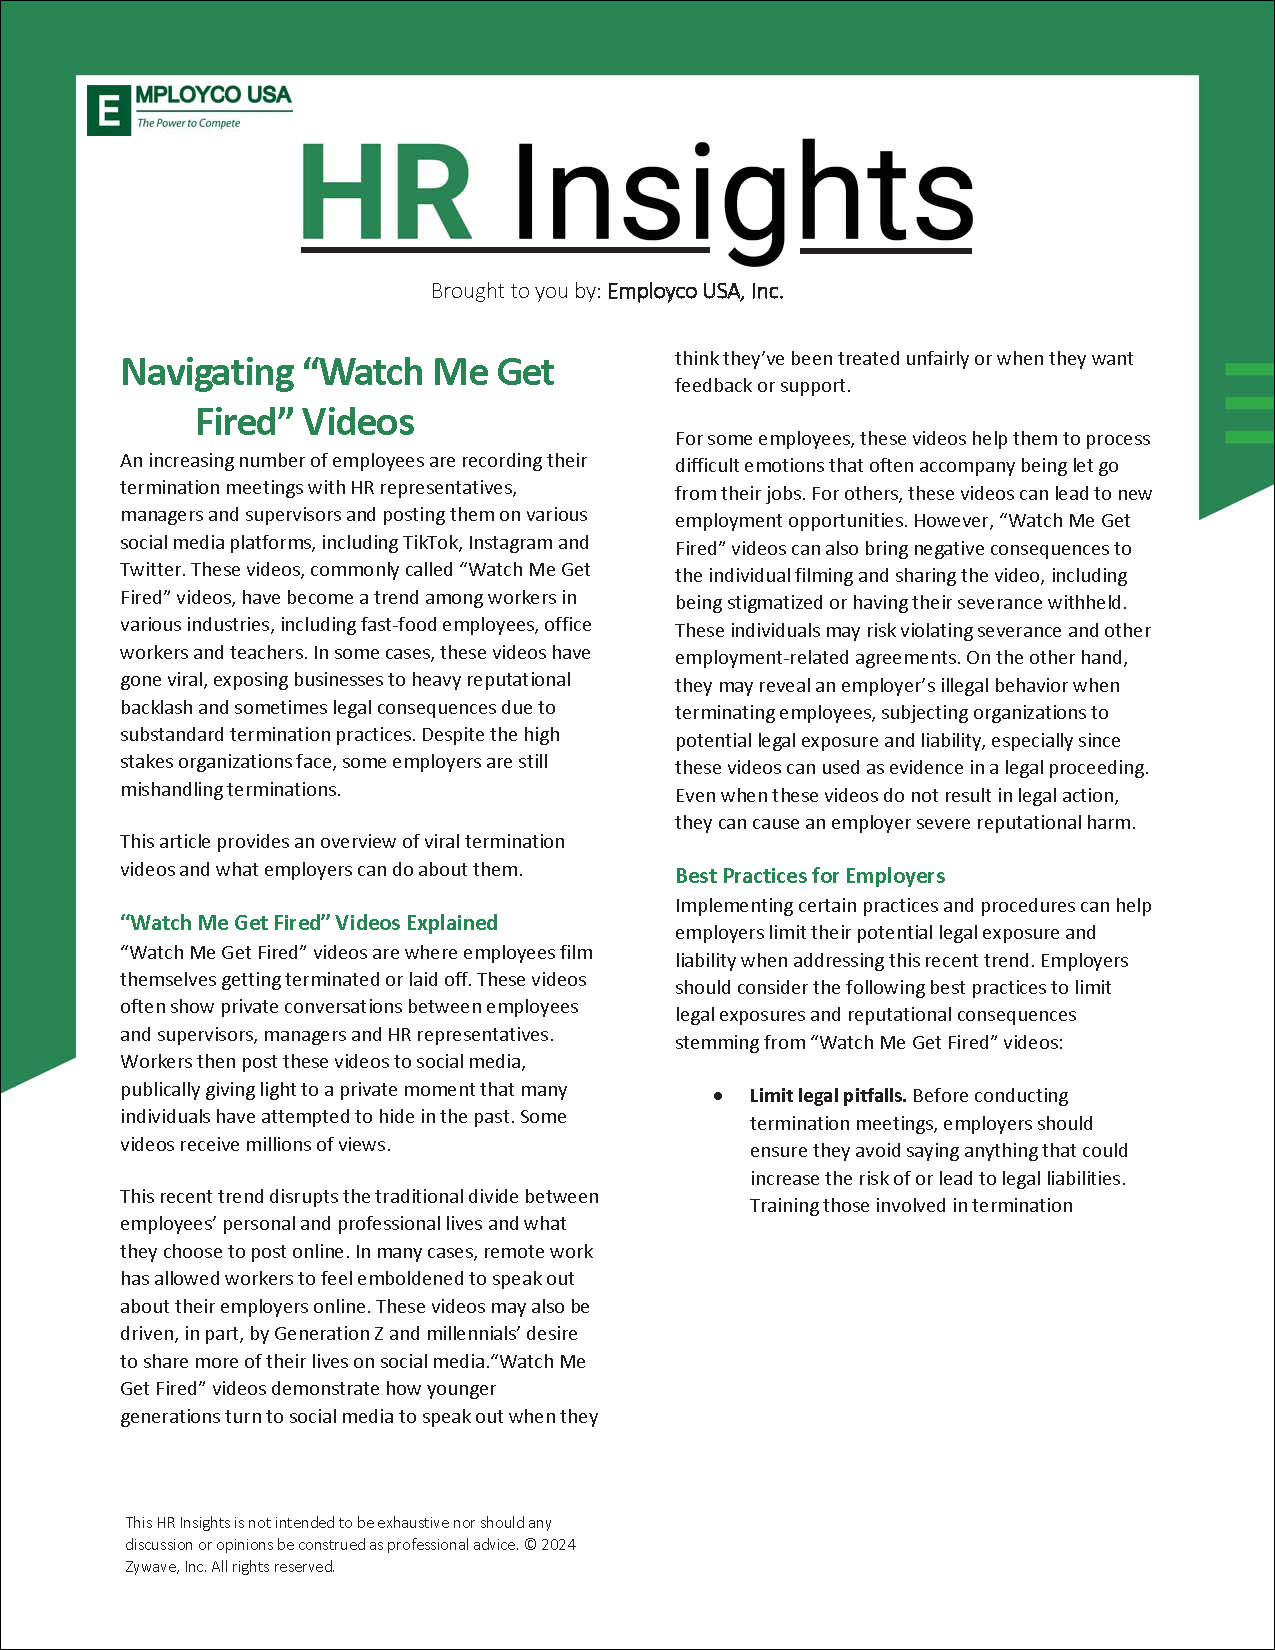 HR Insights: Navigating “Watch Me Get Fired” Videos